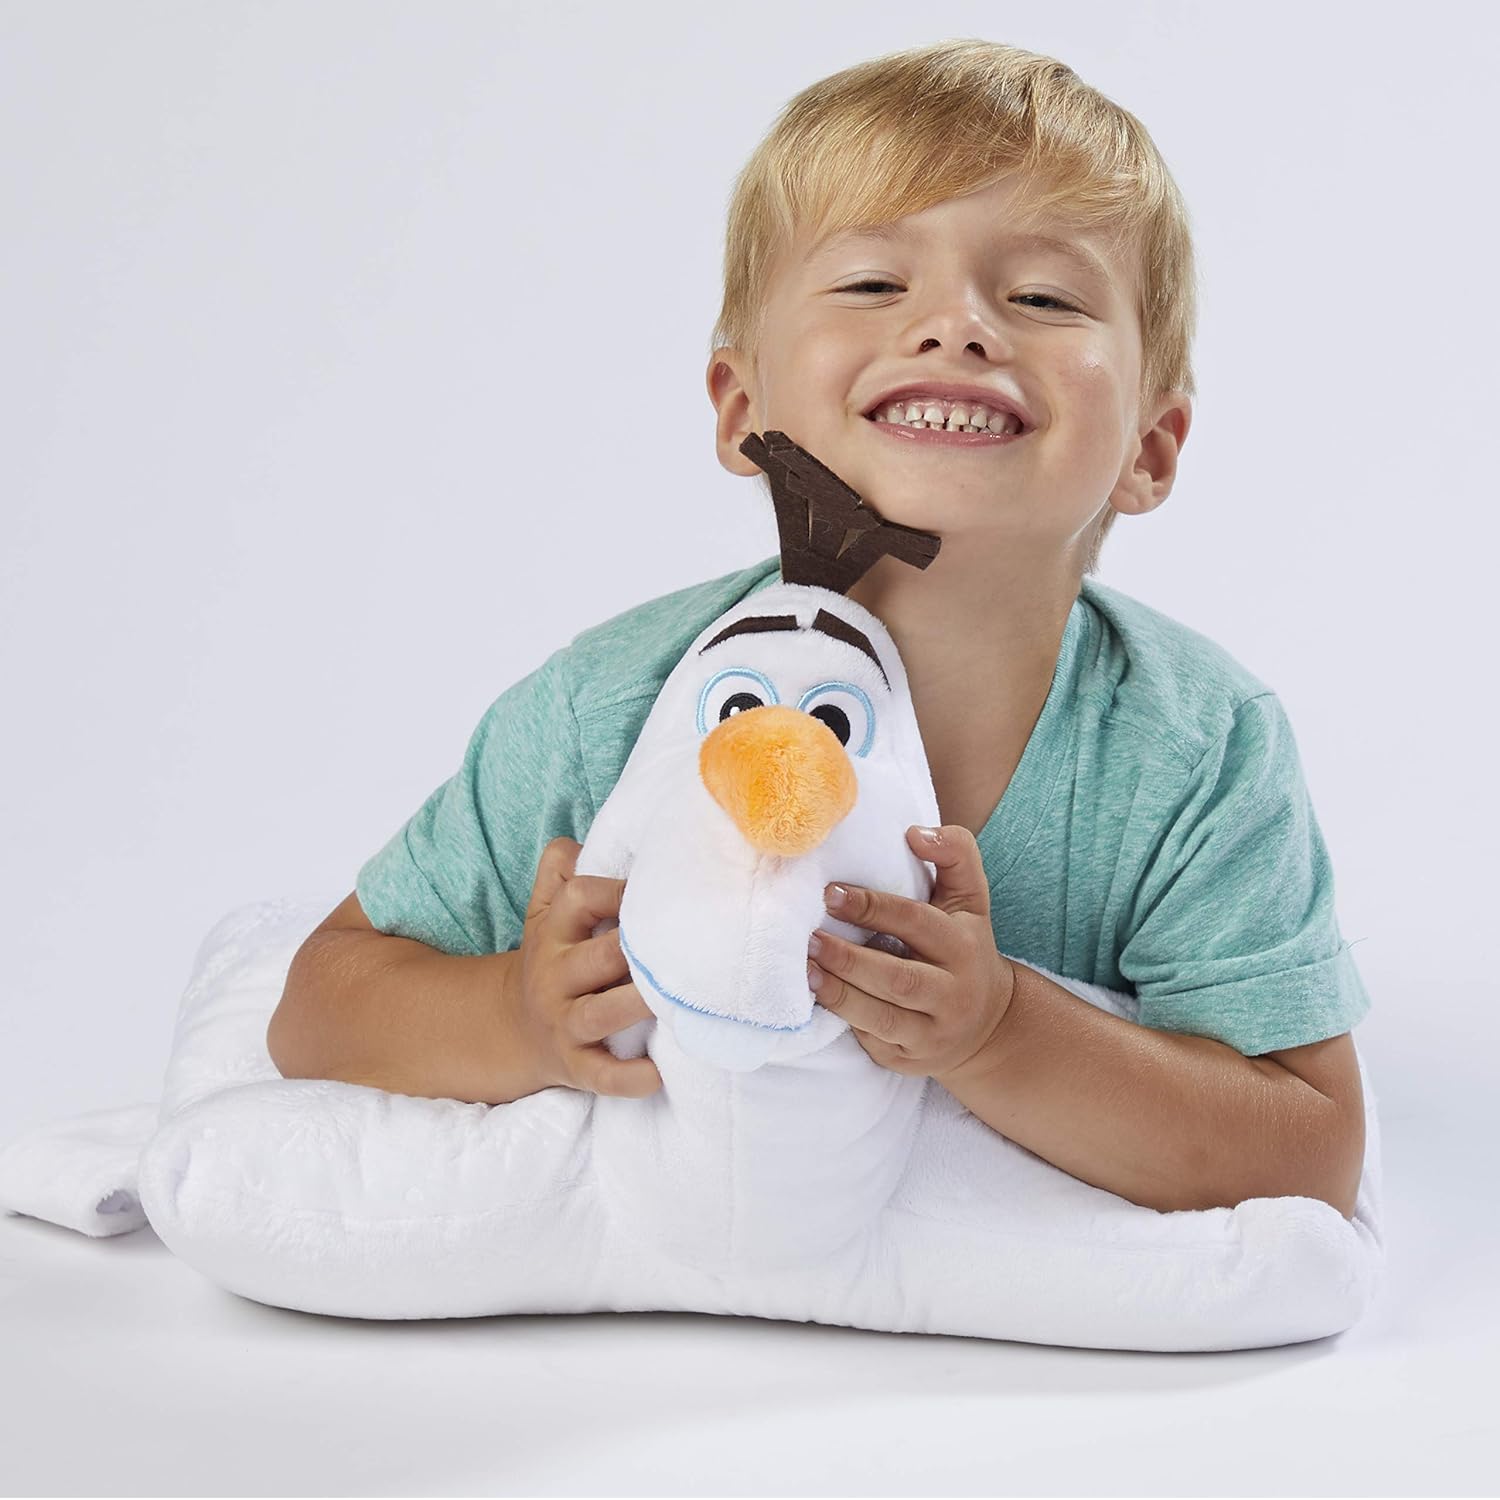 TKM Home Disney Frozen Ii Olaf Snowman Stuffed Animal Plush